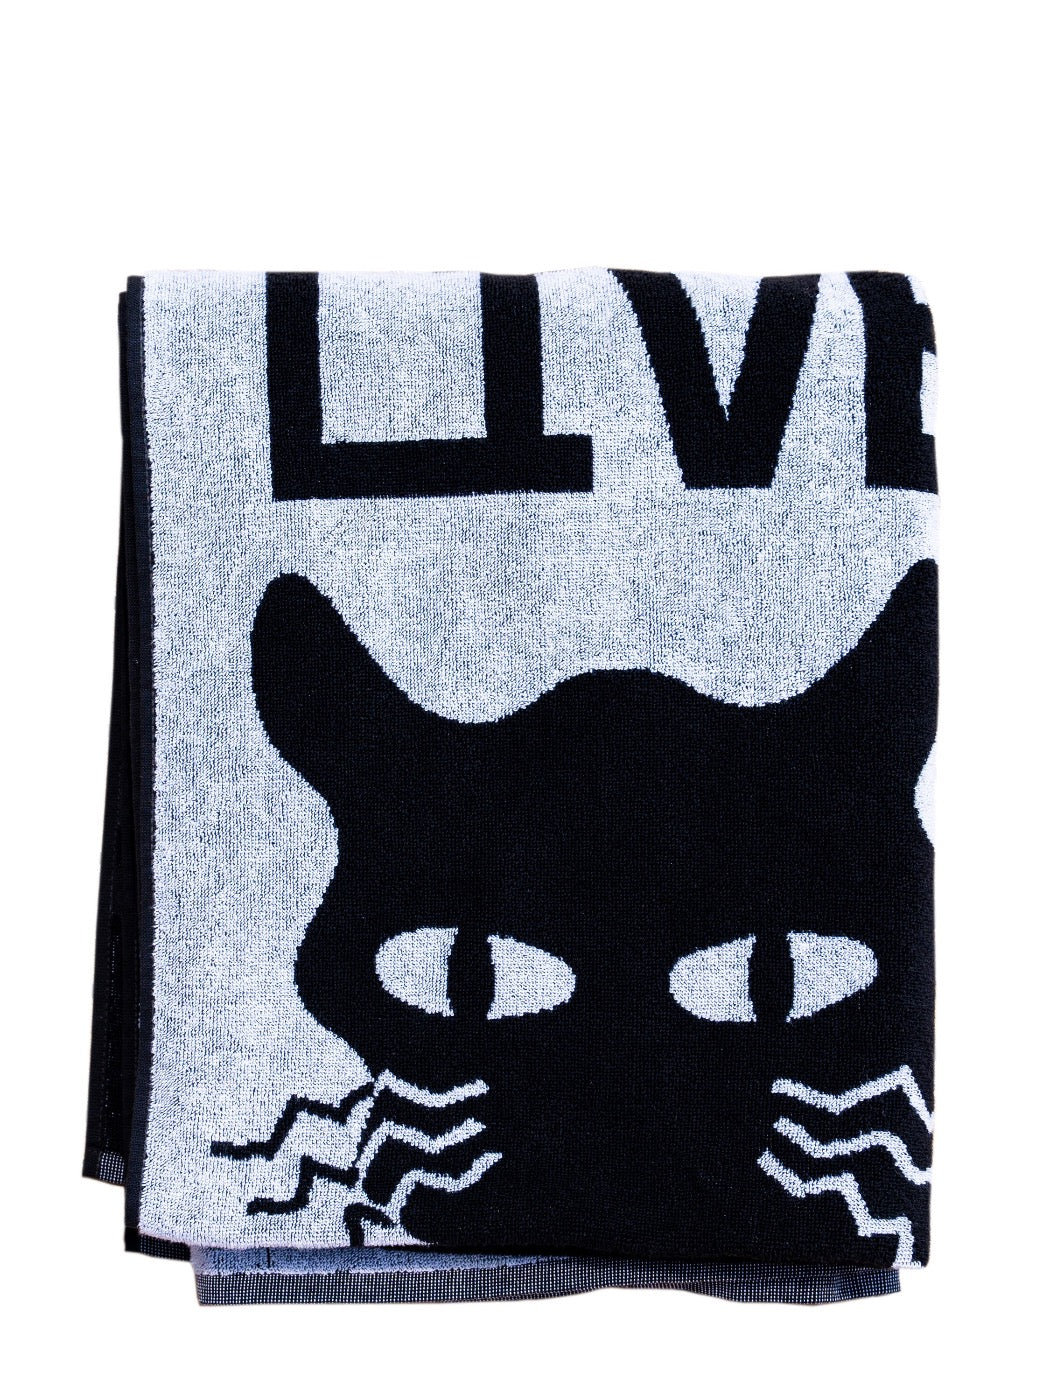 Alexander khabbazi black and white cat nine lives beach towel